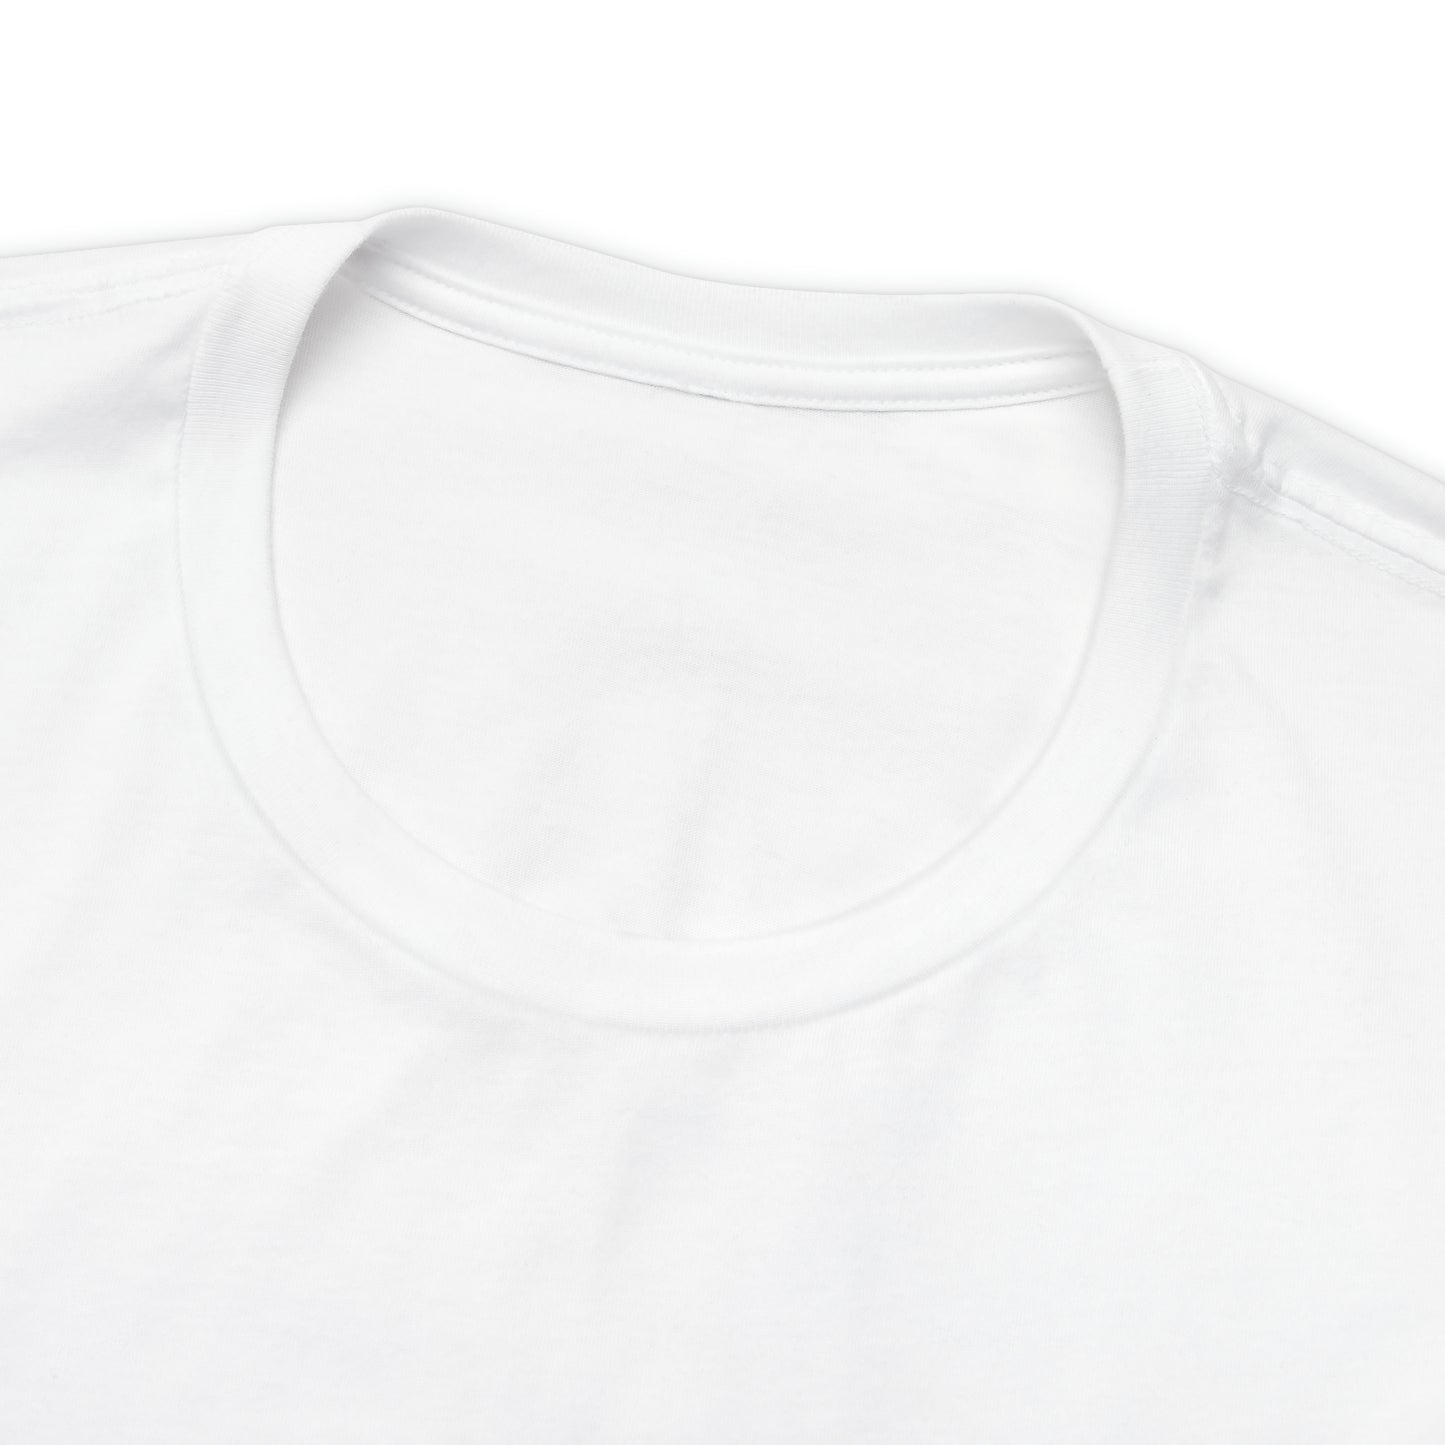 Jersey T-Shirt - Unisex - "Positive Altitude" Collection (250)